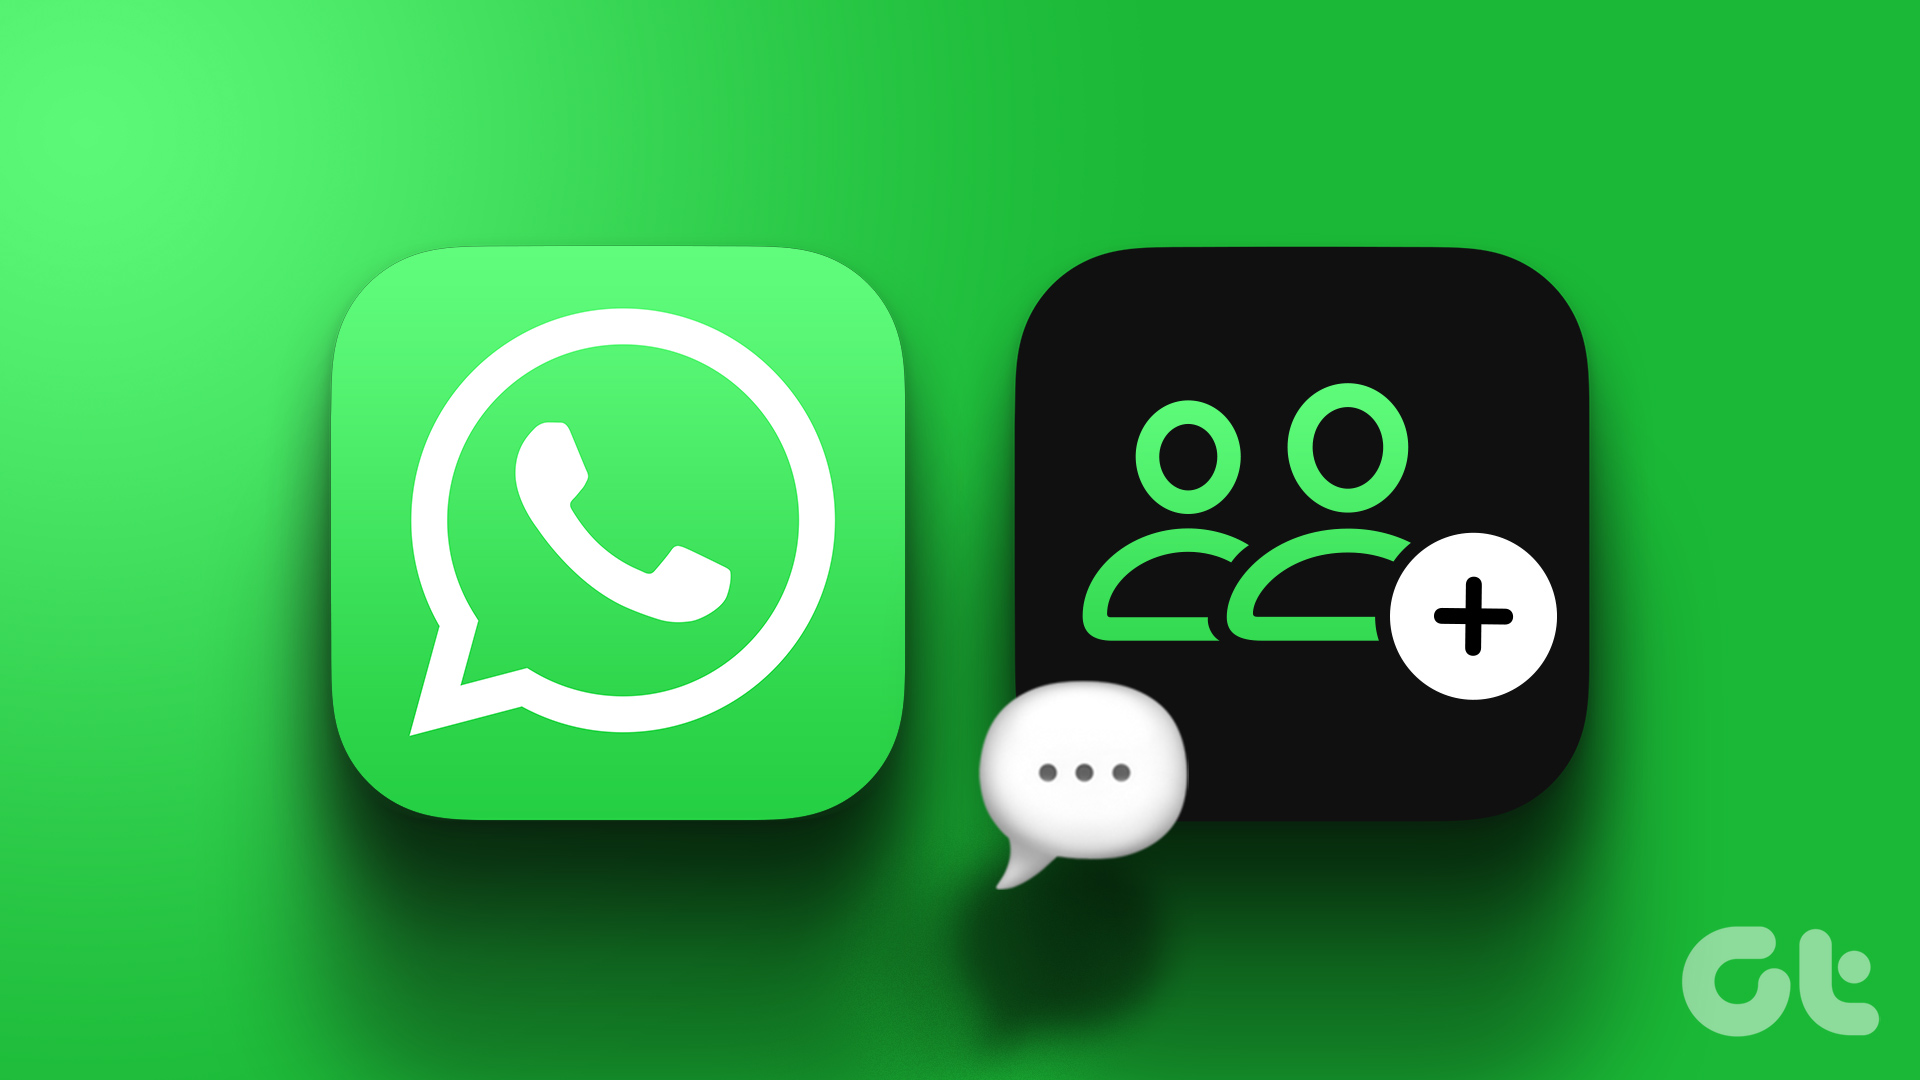 Add someone to whatsapp chat